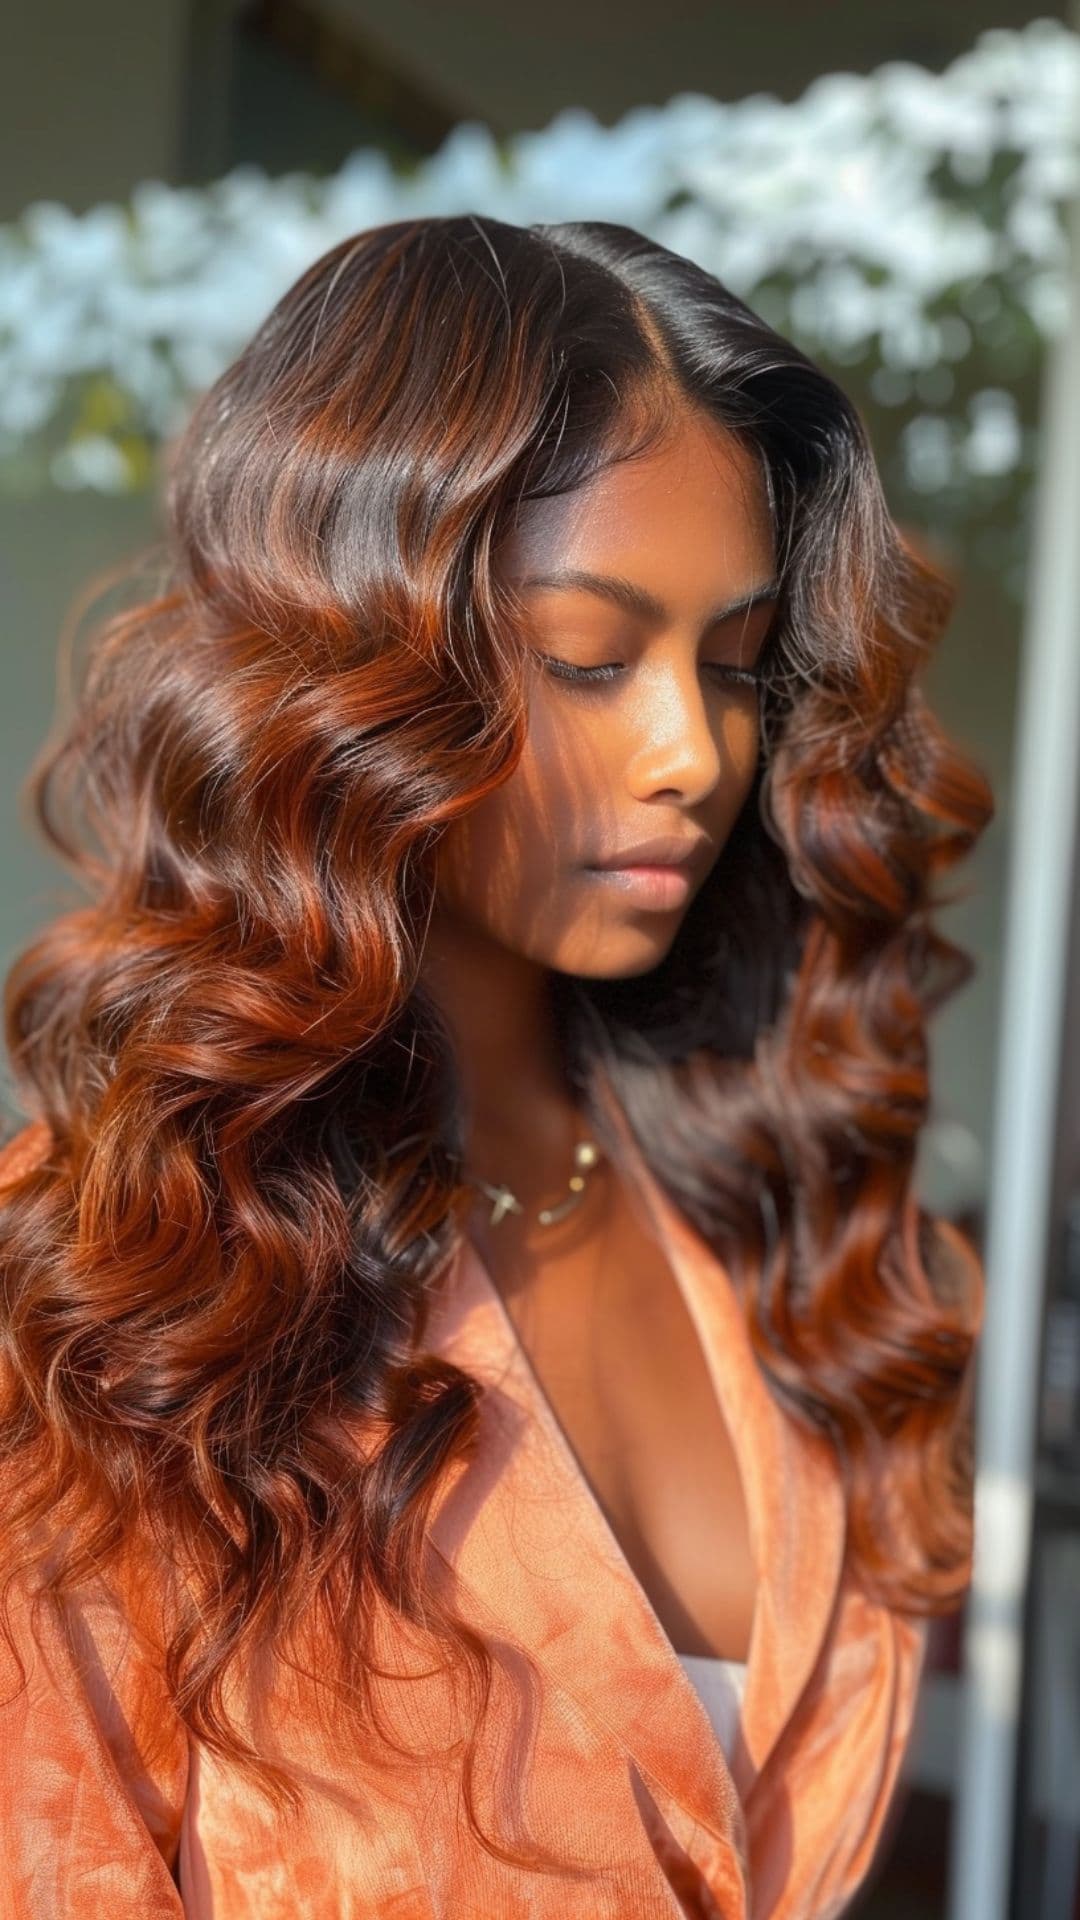 A black woman modelling a rich auburn hair.